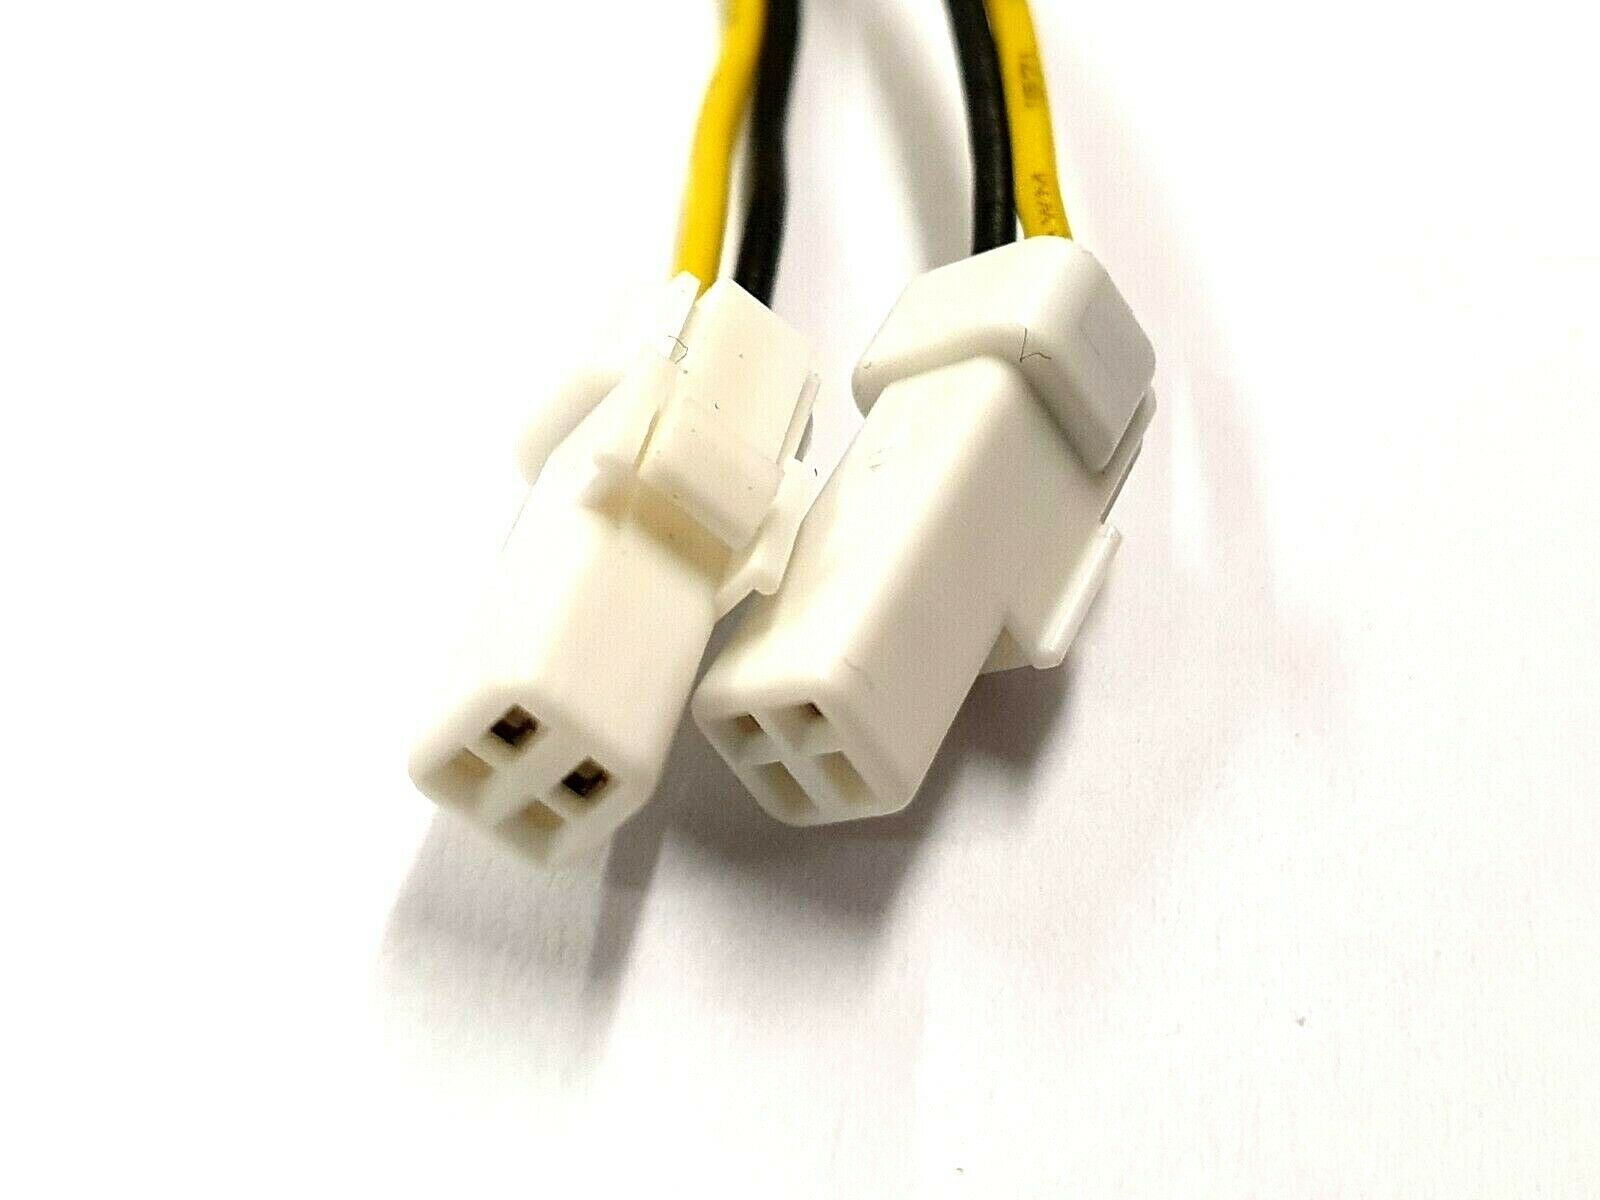 Adapter Kabel LED Halogen Blinker für KTM RC8, 690 Duke, SMC, SMR